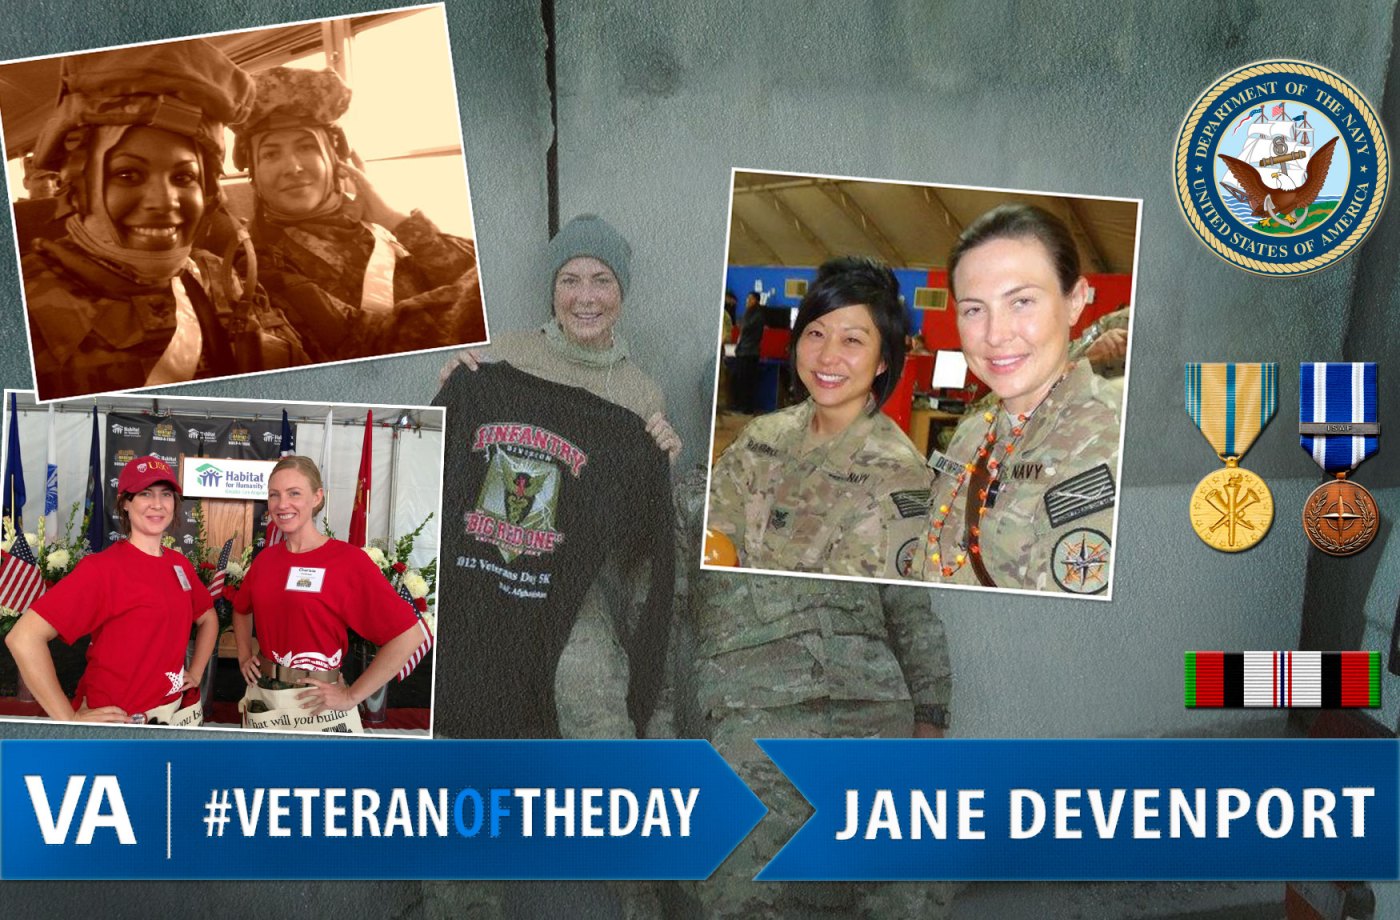 Jane Devenport - Veteran of the Day